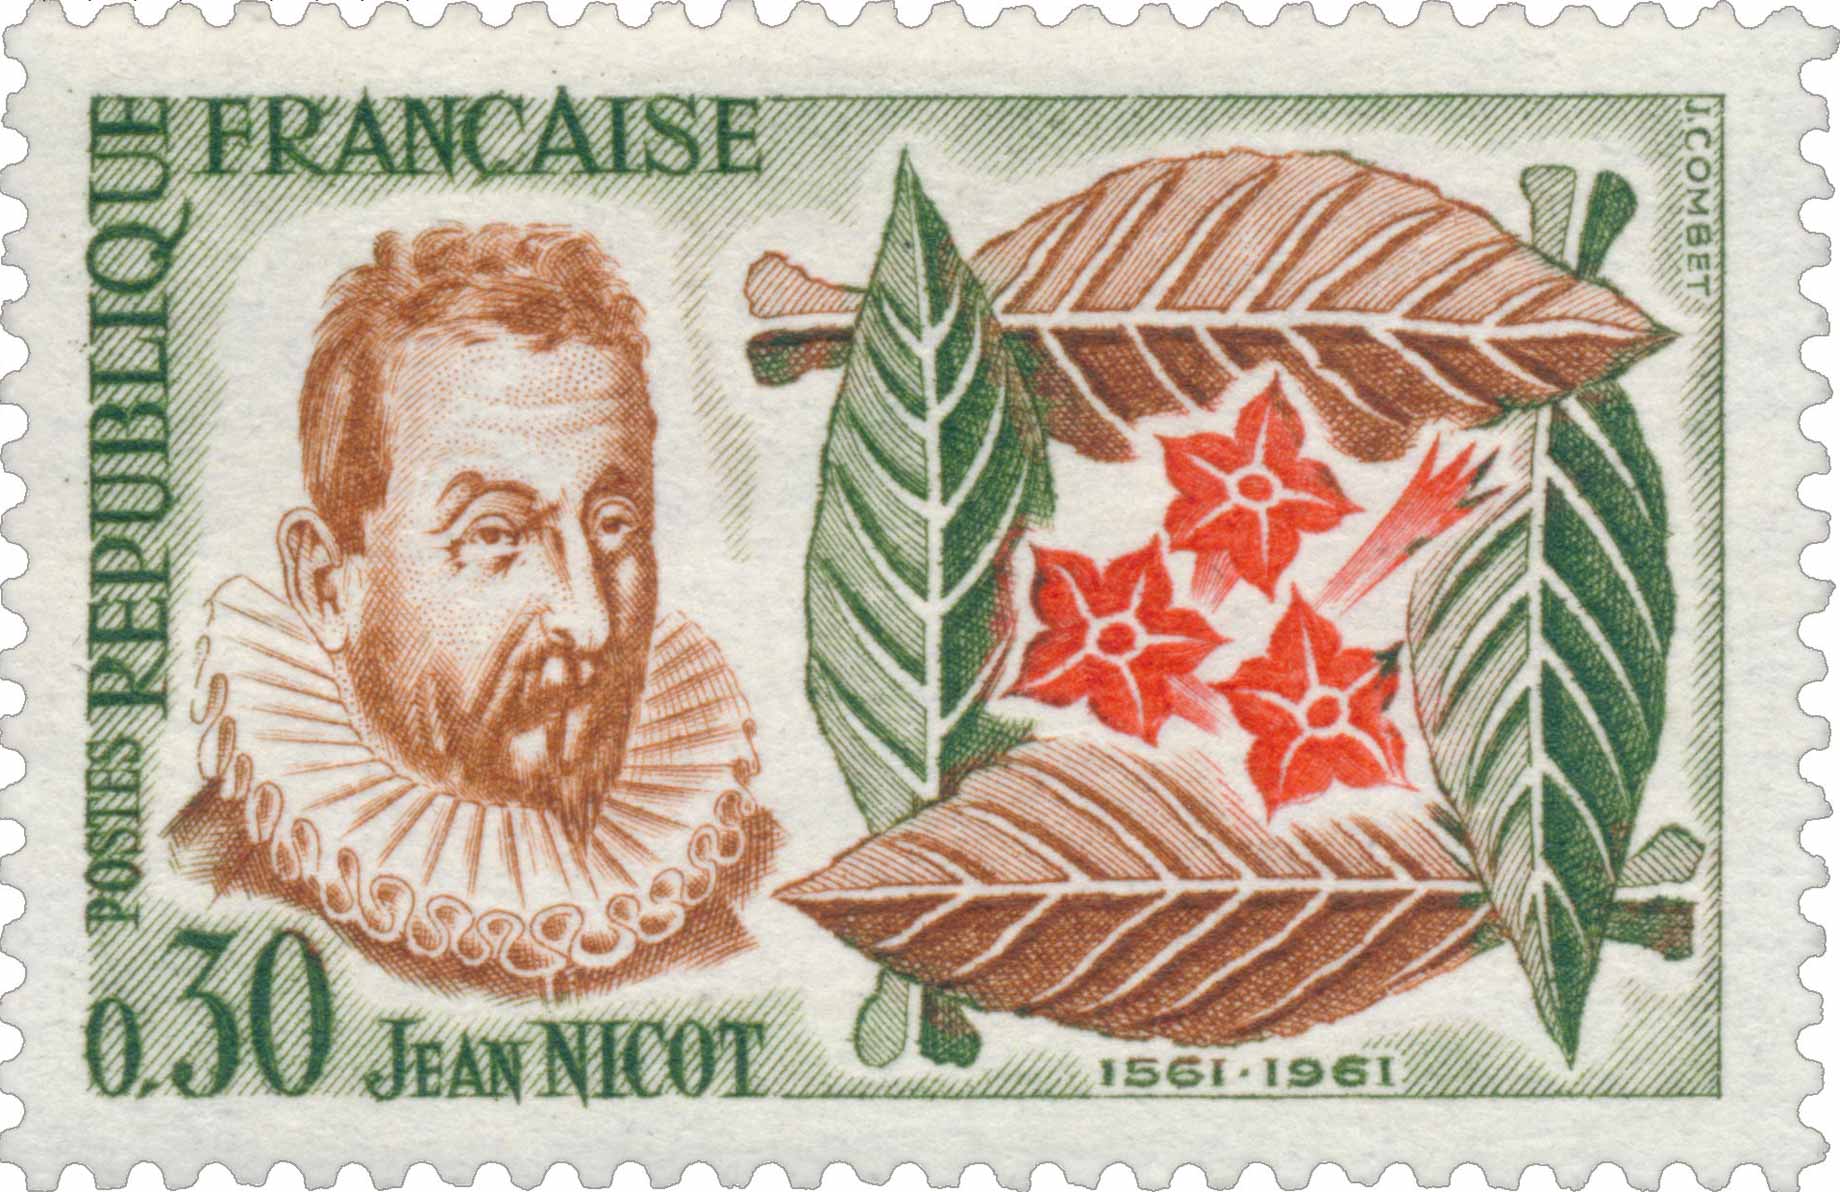 Timbre de 1961 représentant Jean Nicot